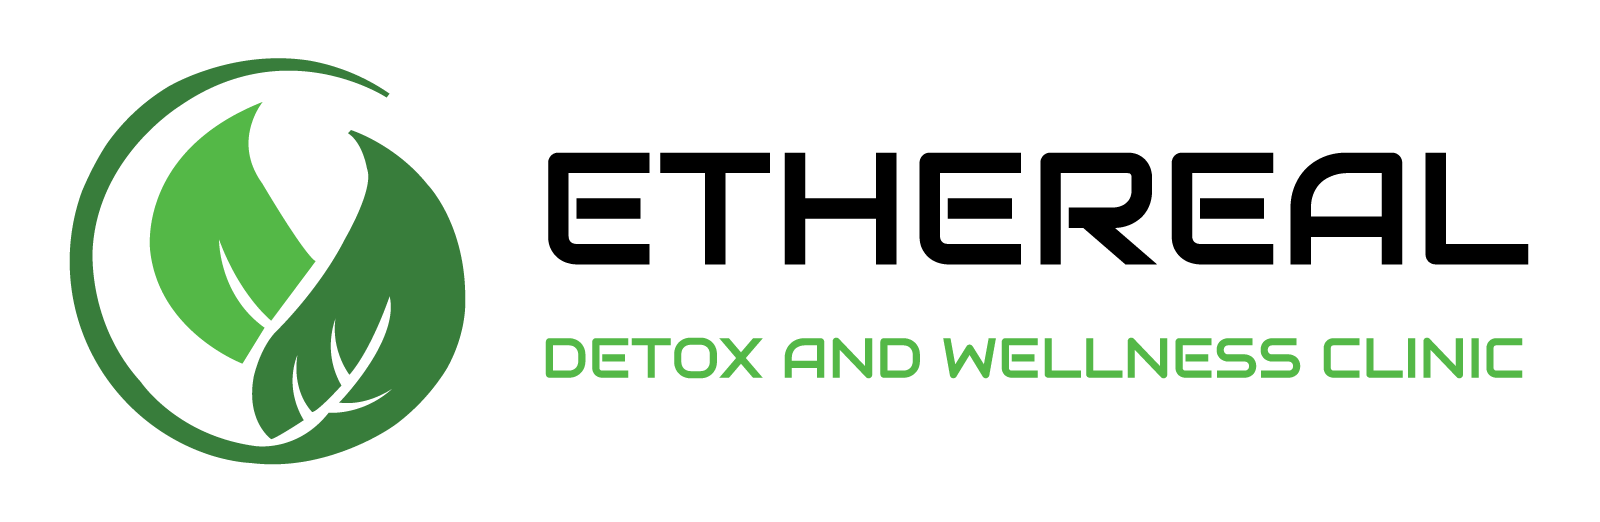 ethereal detox